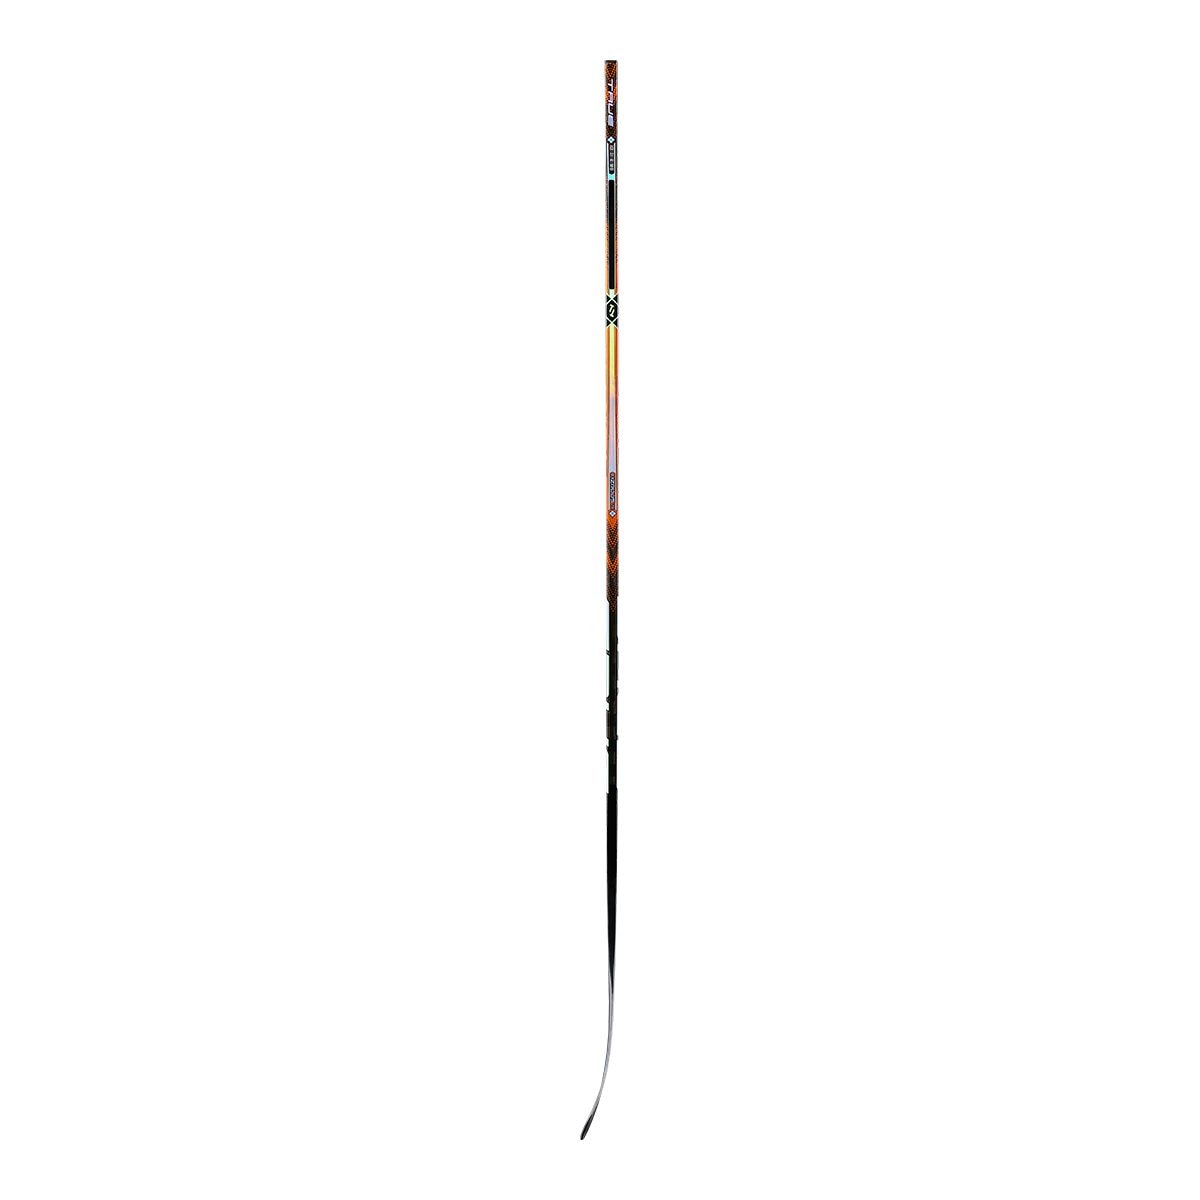 Image of True Hzrdus 7X Grip Senior Hockey Stick Carbon Fiber Low Kick